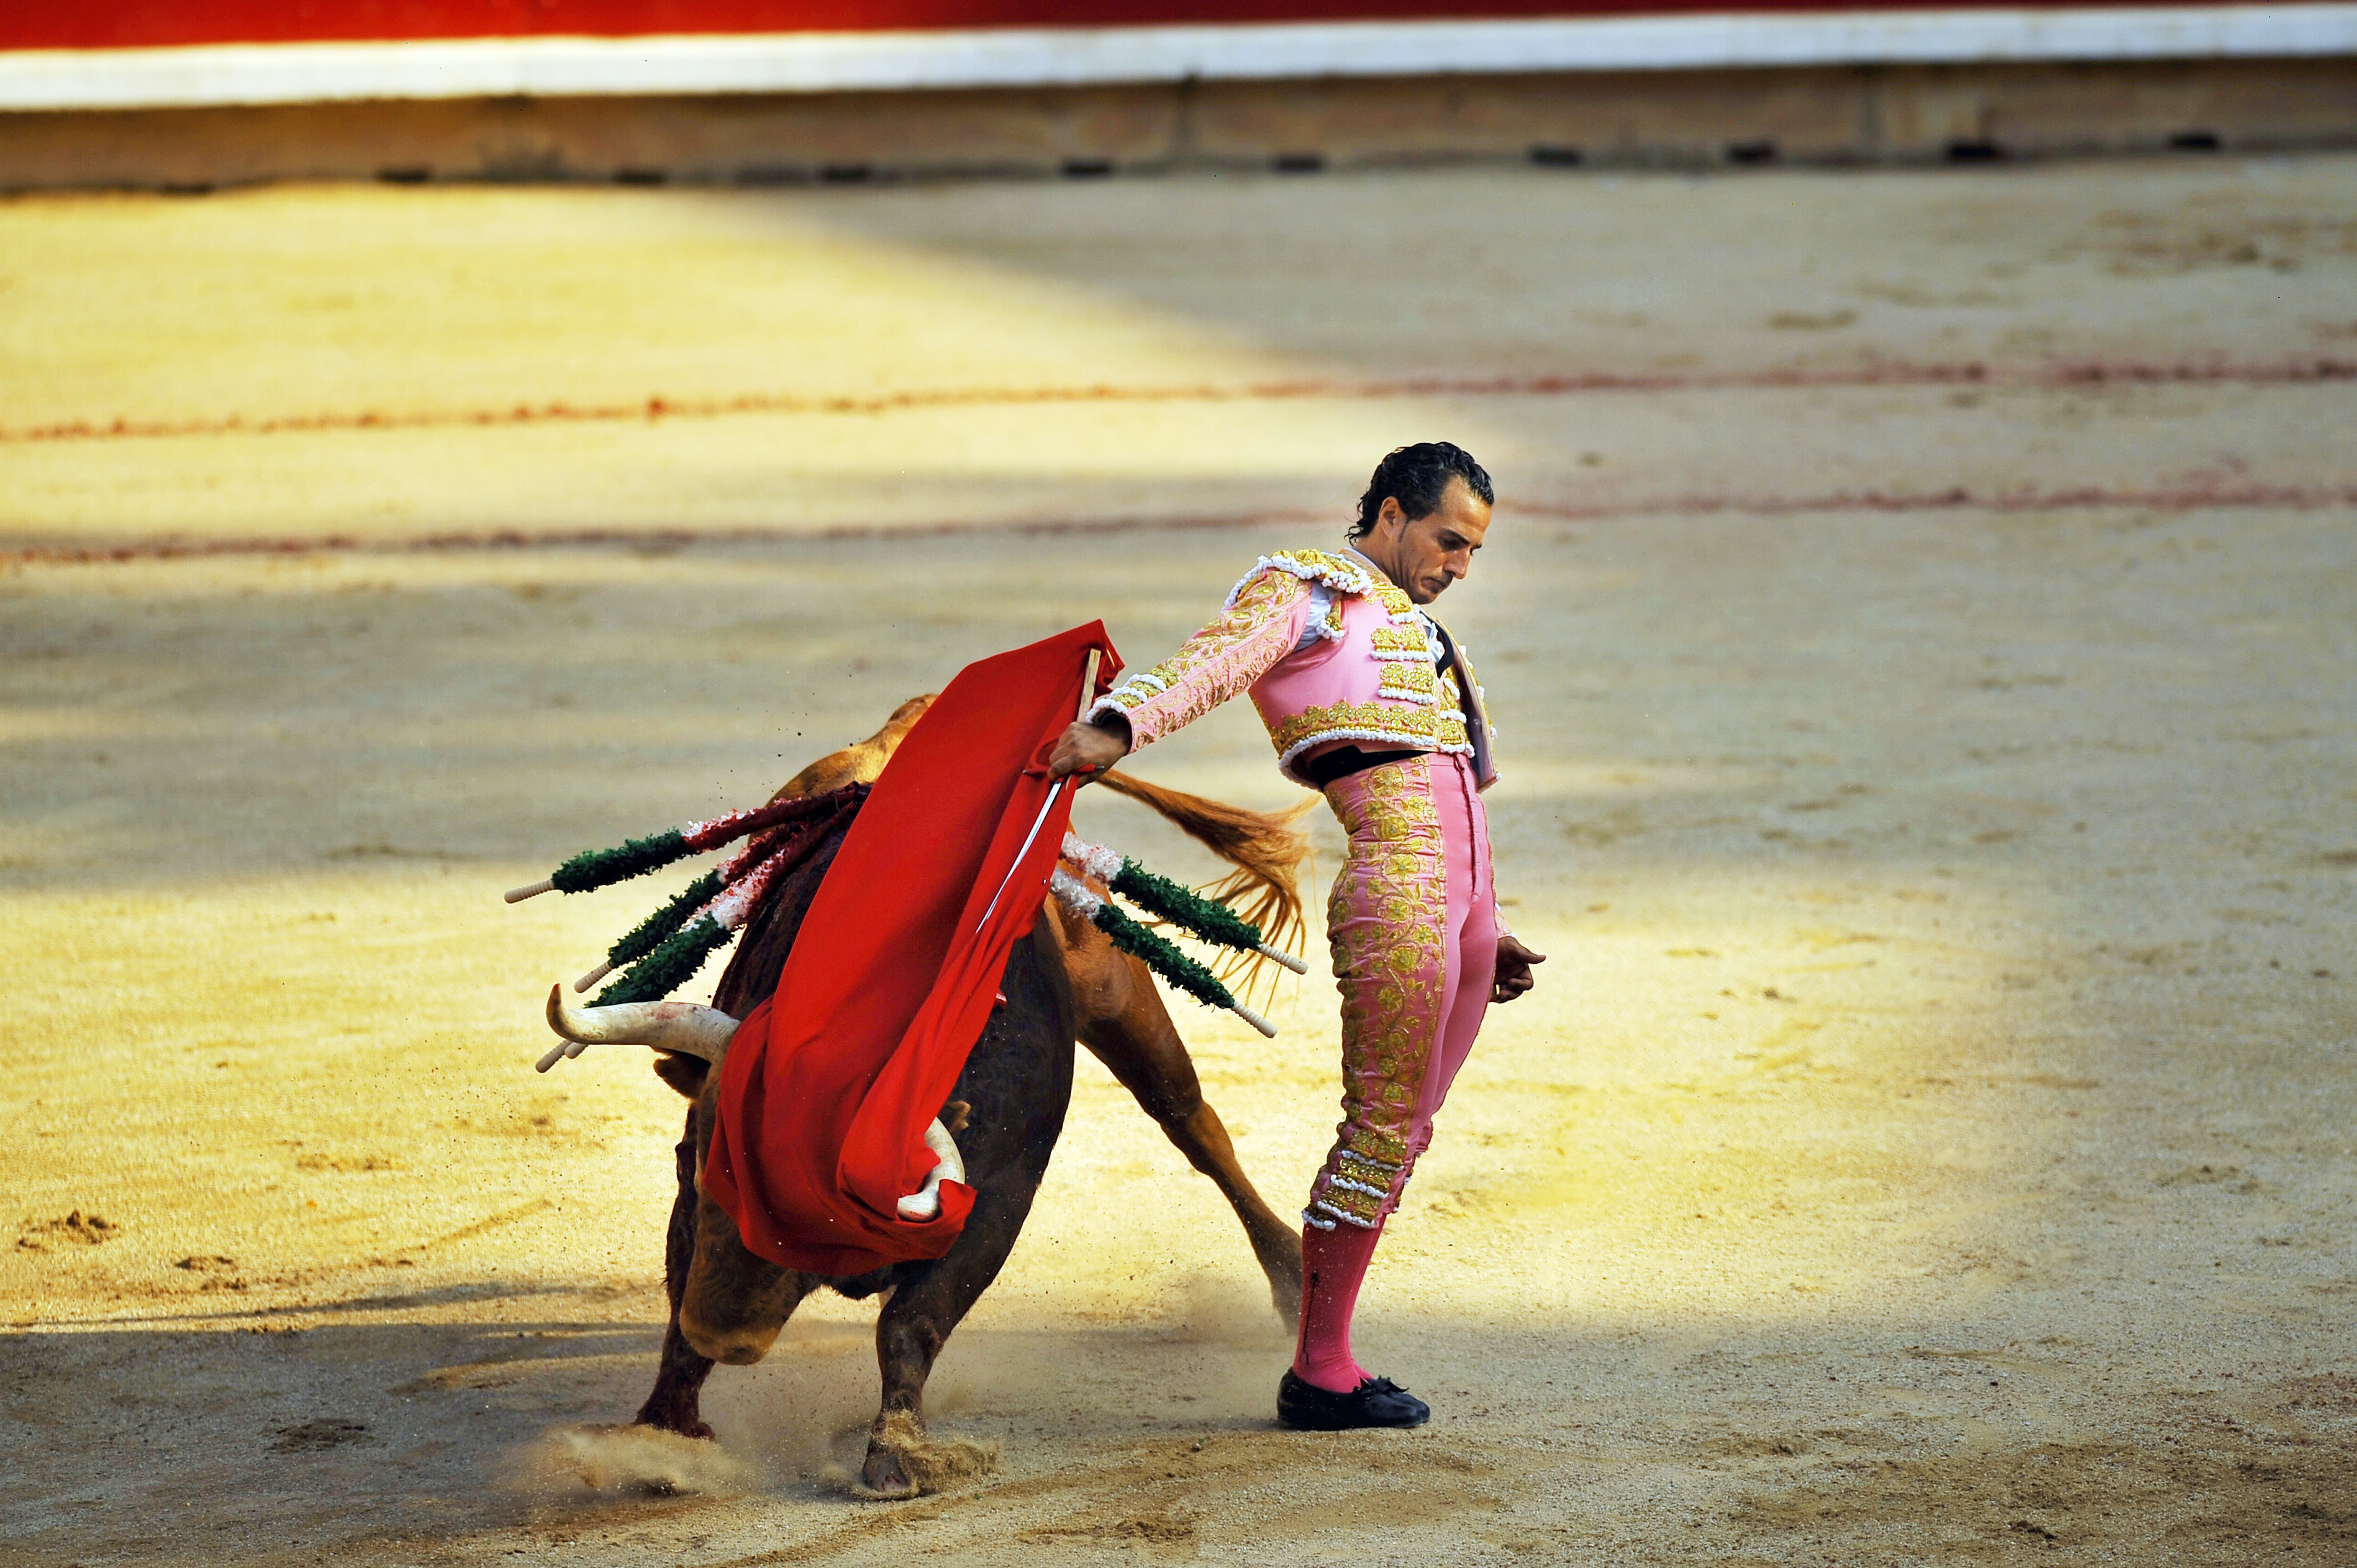 The death of a matador will, paradoxically, make bullfighting more ...